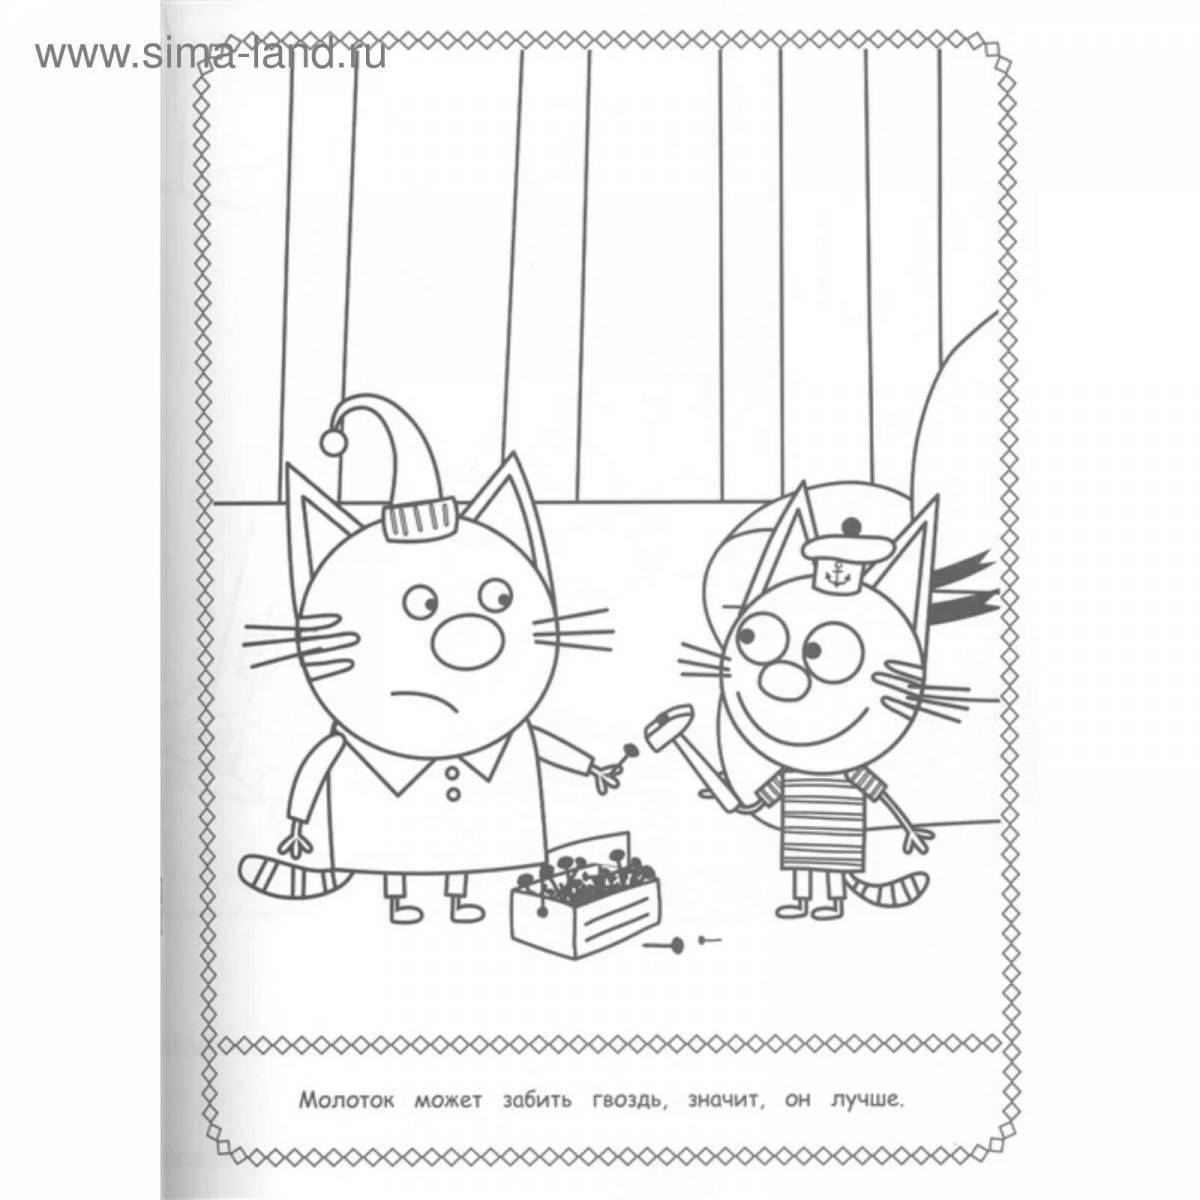 Three cats humorous cartoon coloring book